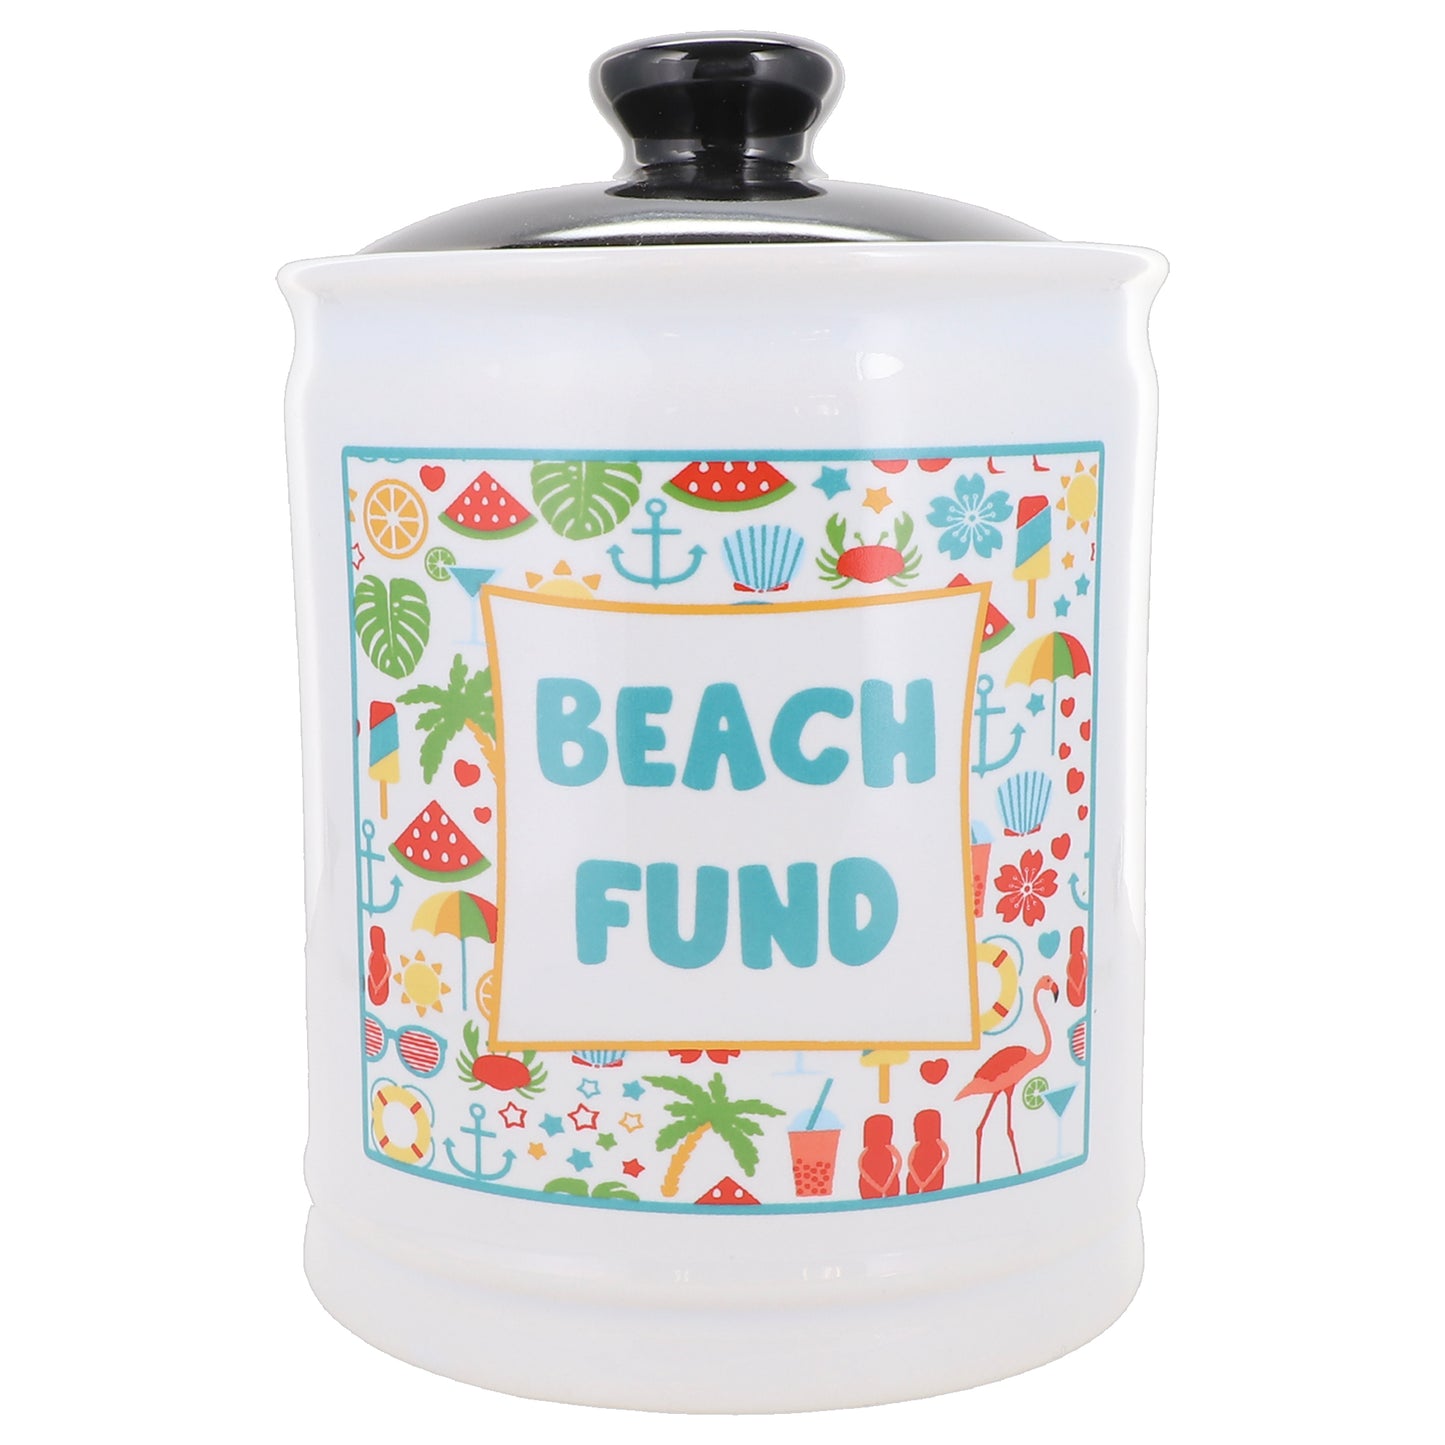 Cottage Creek Beach Fund Piggy Bank, Ceramic, 6", Multicolored Beach Vacation Bank